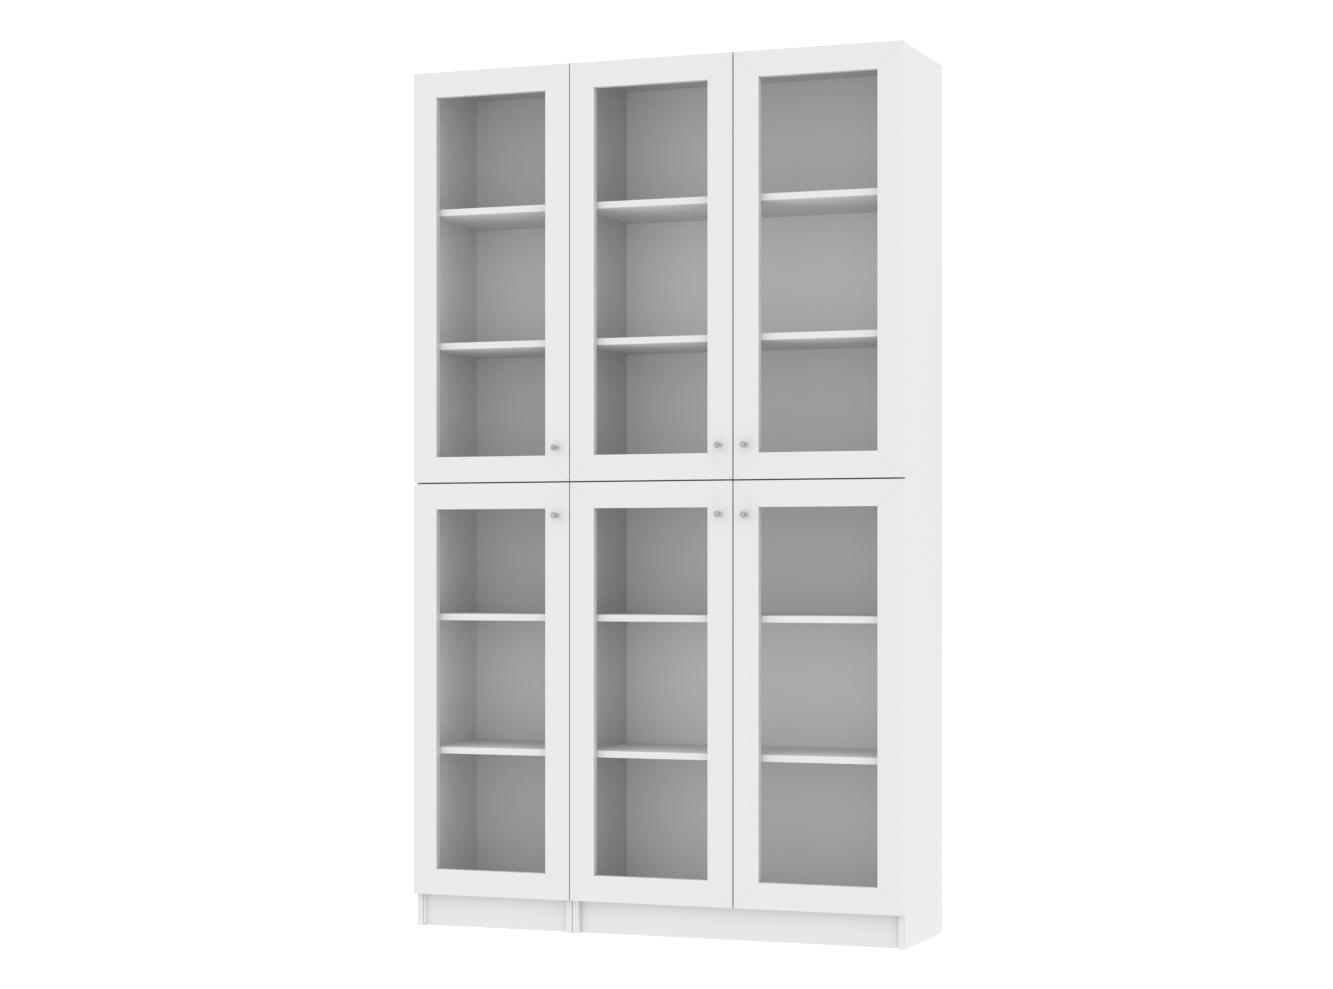  Книжный шкаф Билли 23 white ИКЕА (IKEA) изображение товара